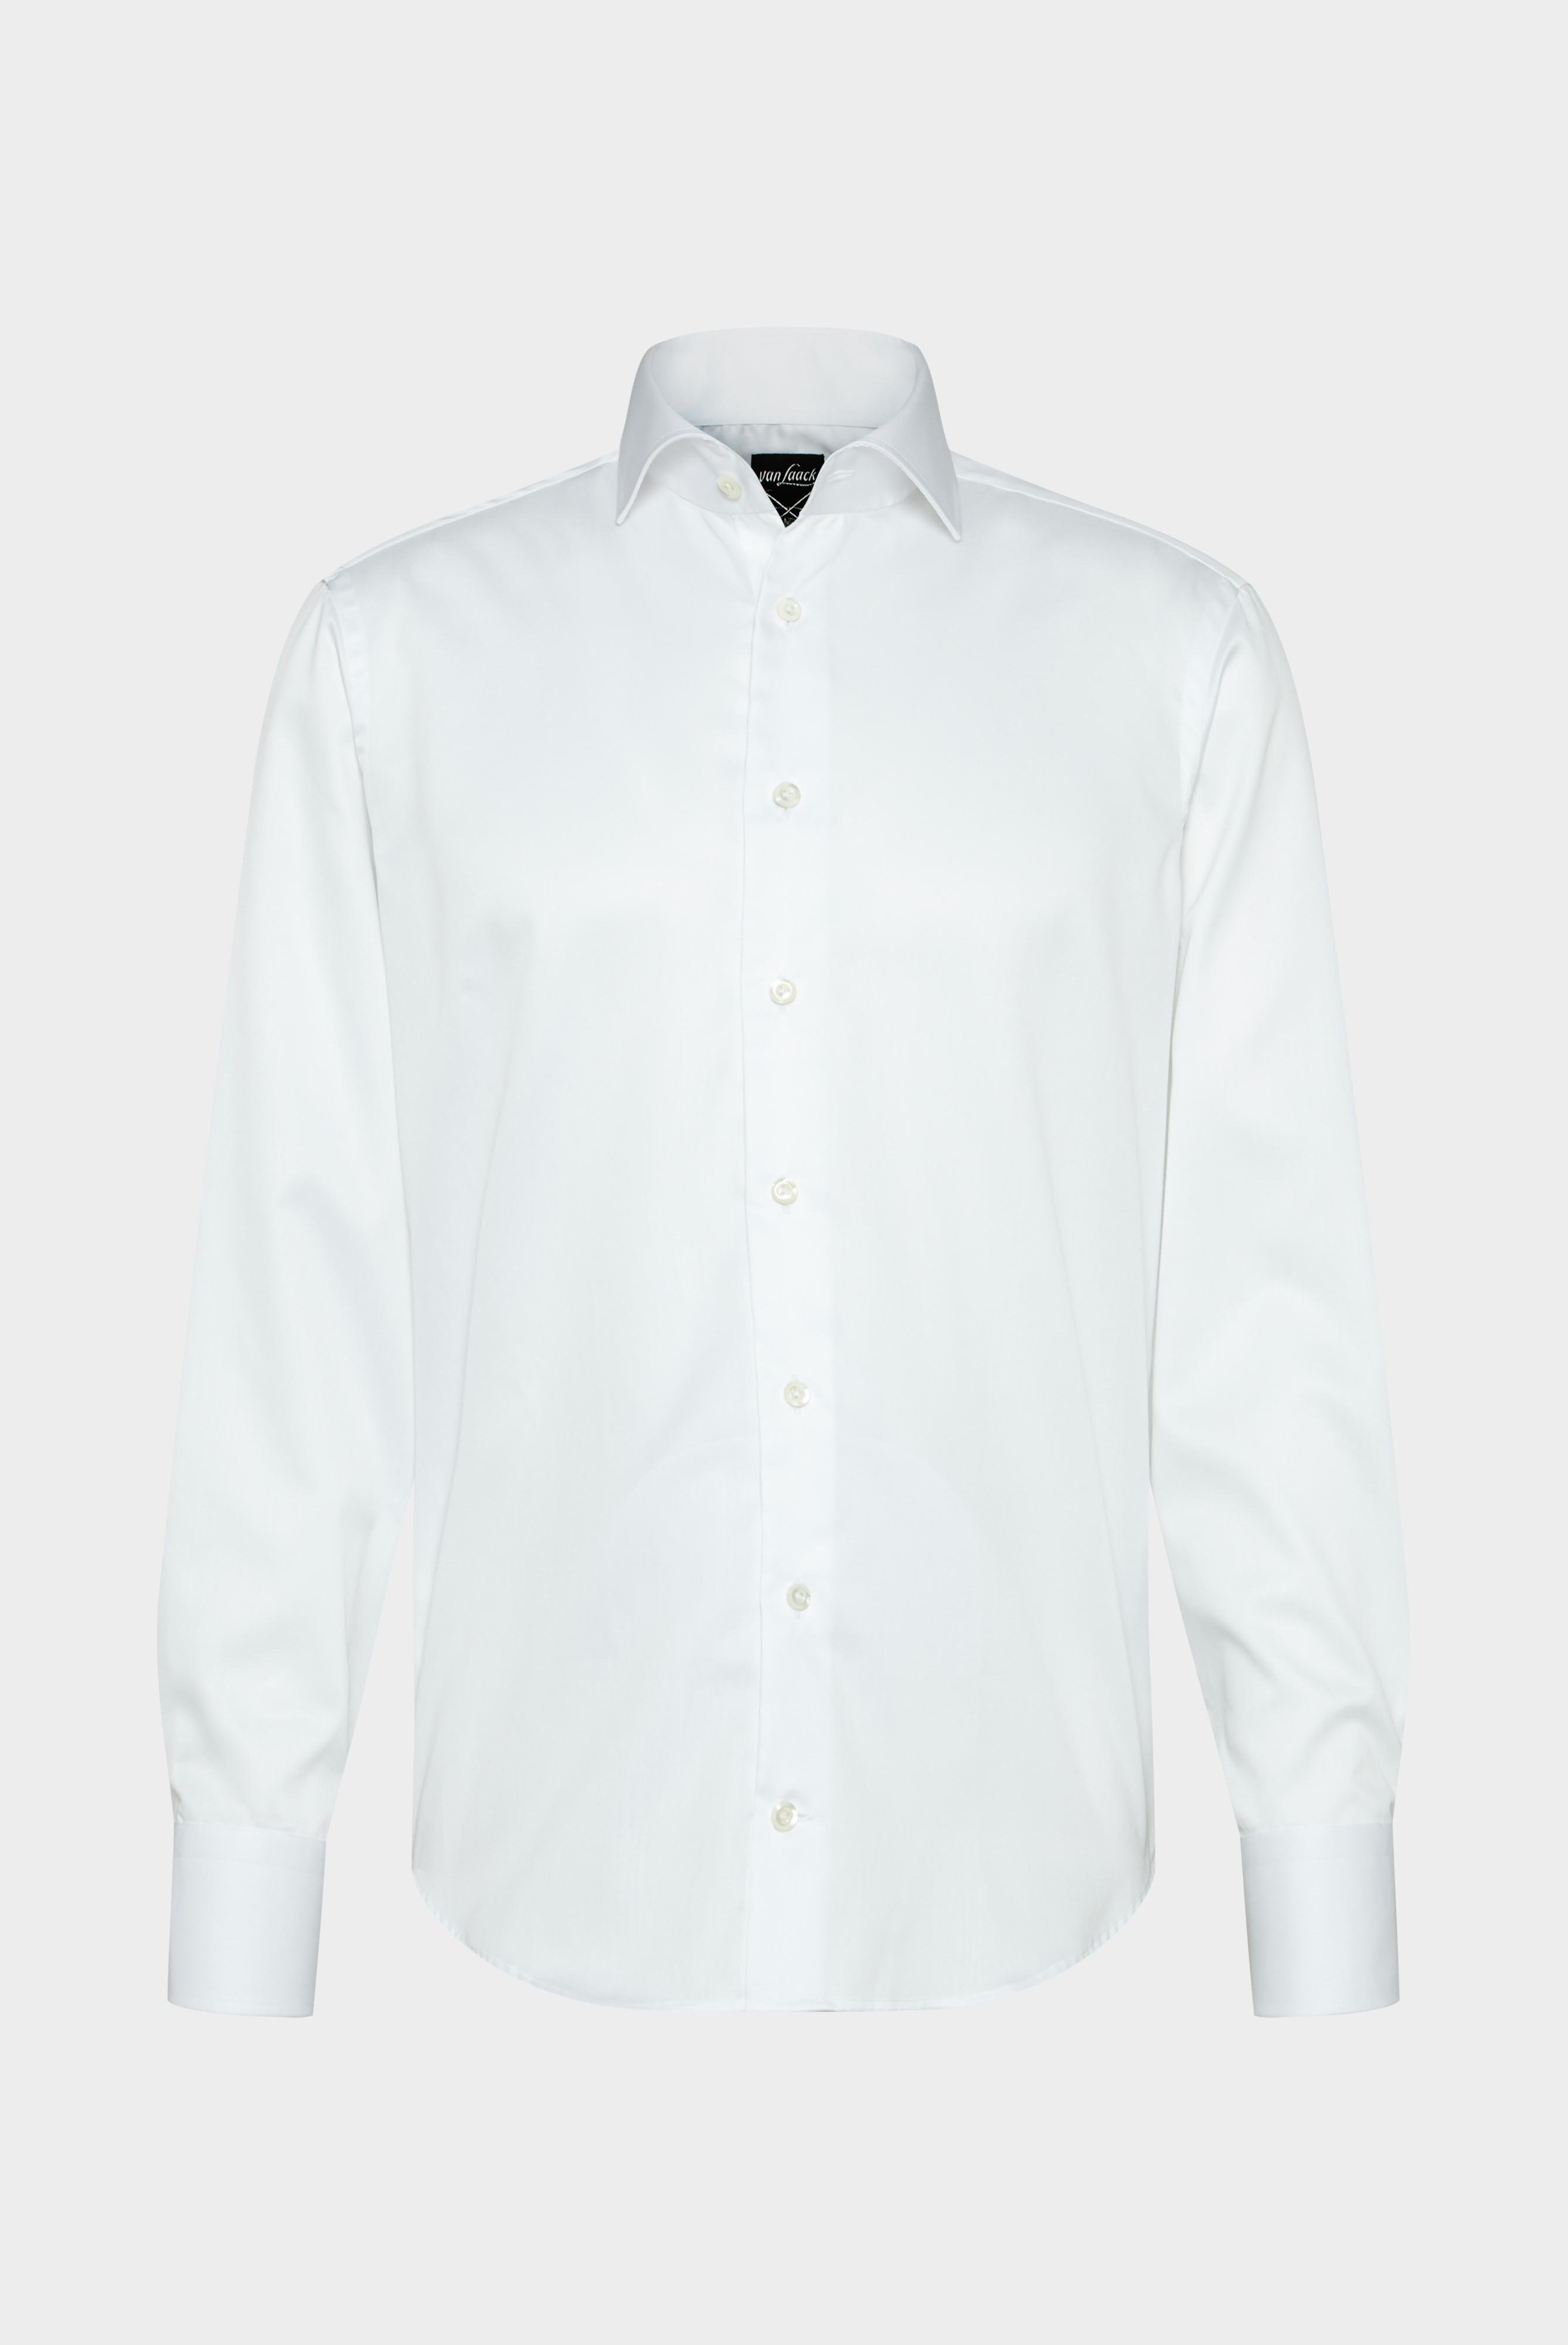 Easy Iron Shirts+Wrinkle-Free Twill Shirt+20.2020.BQ.132241.000.37